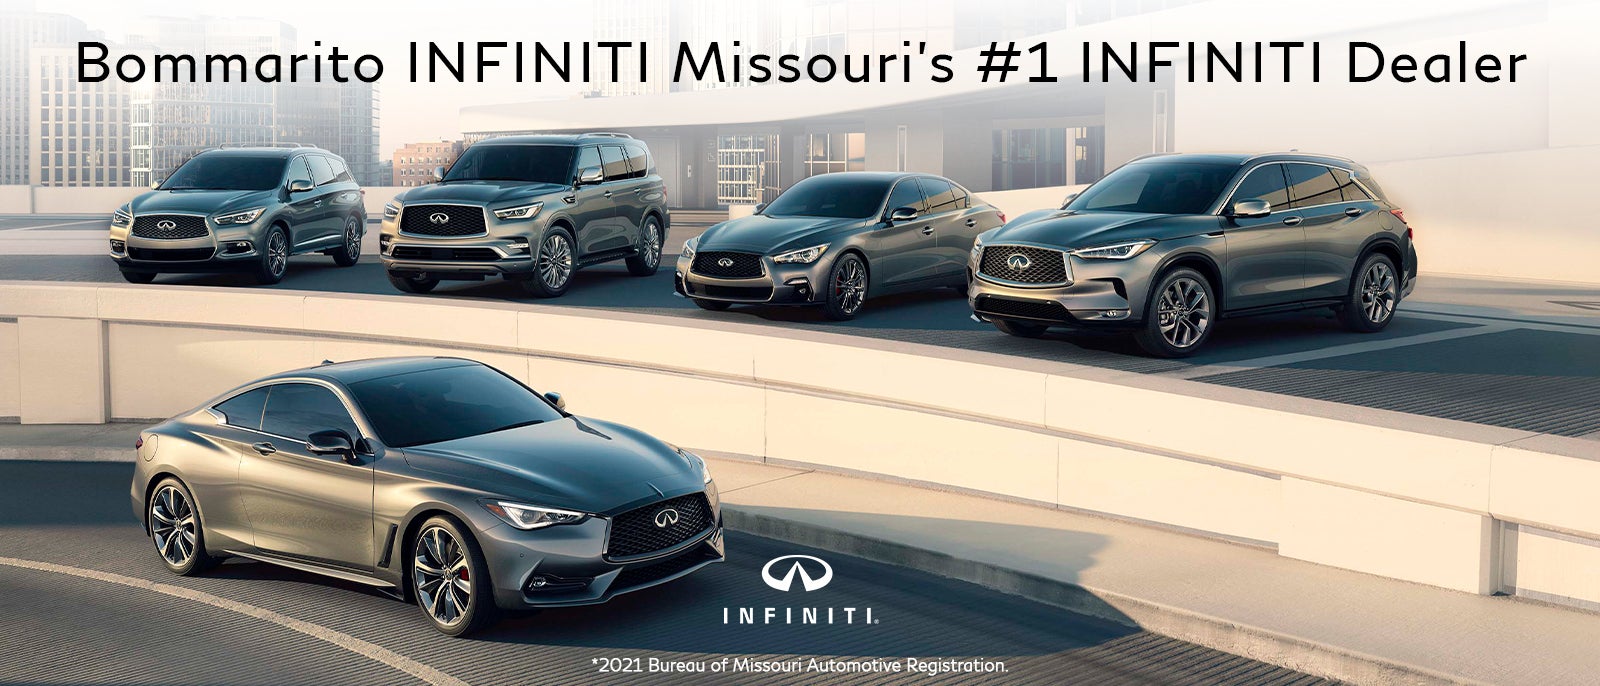 Image advertising Bommarito INFINITI as Missouri's #1 INFINITI dealer